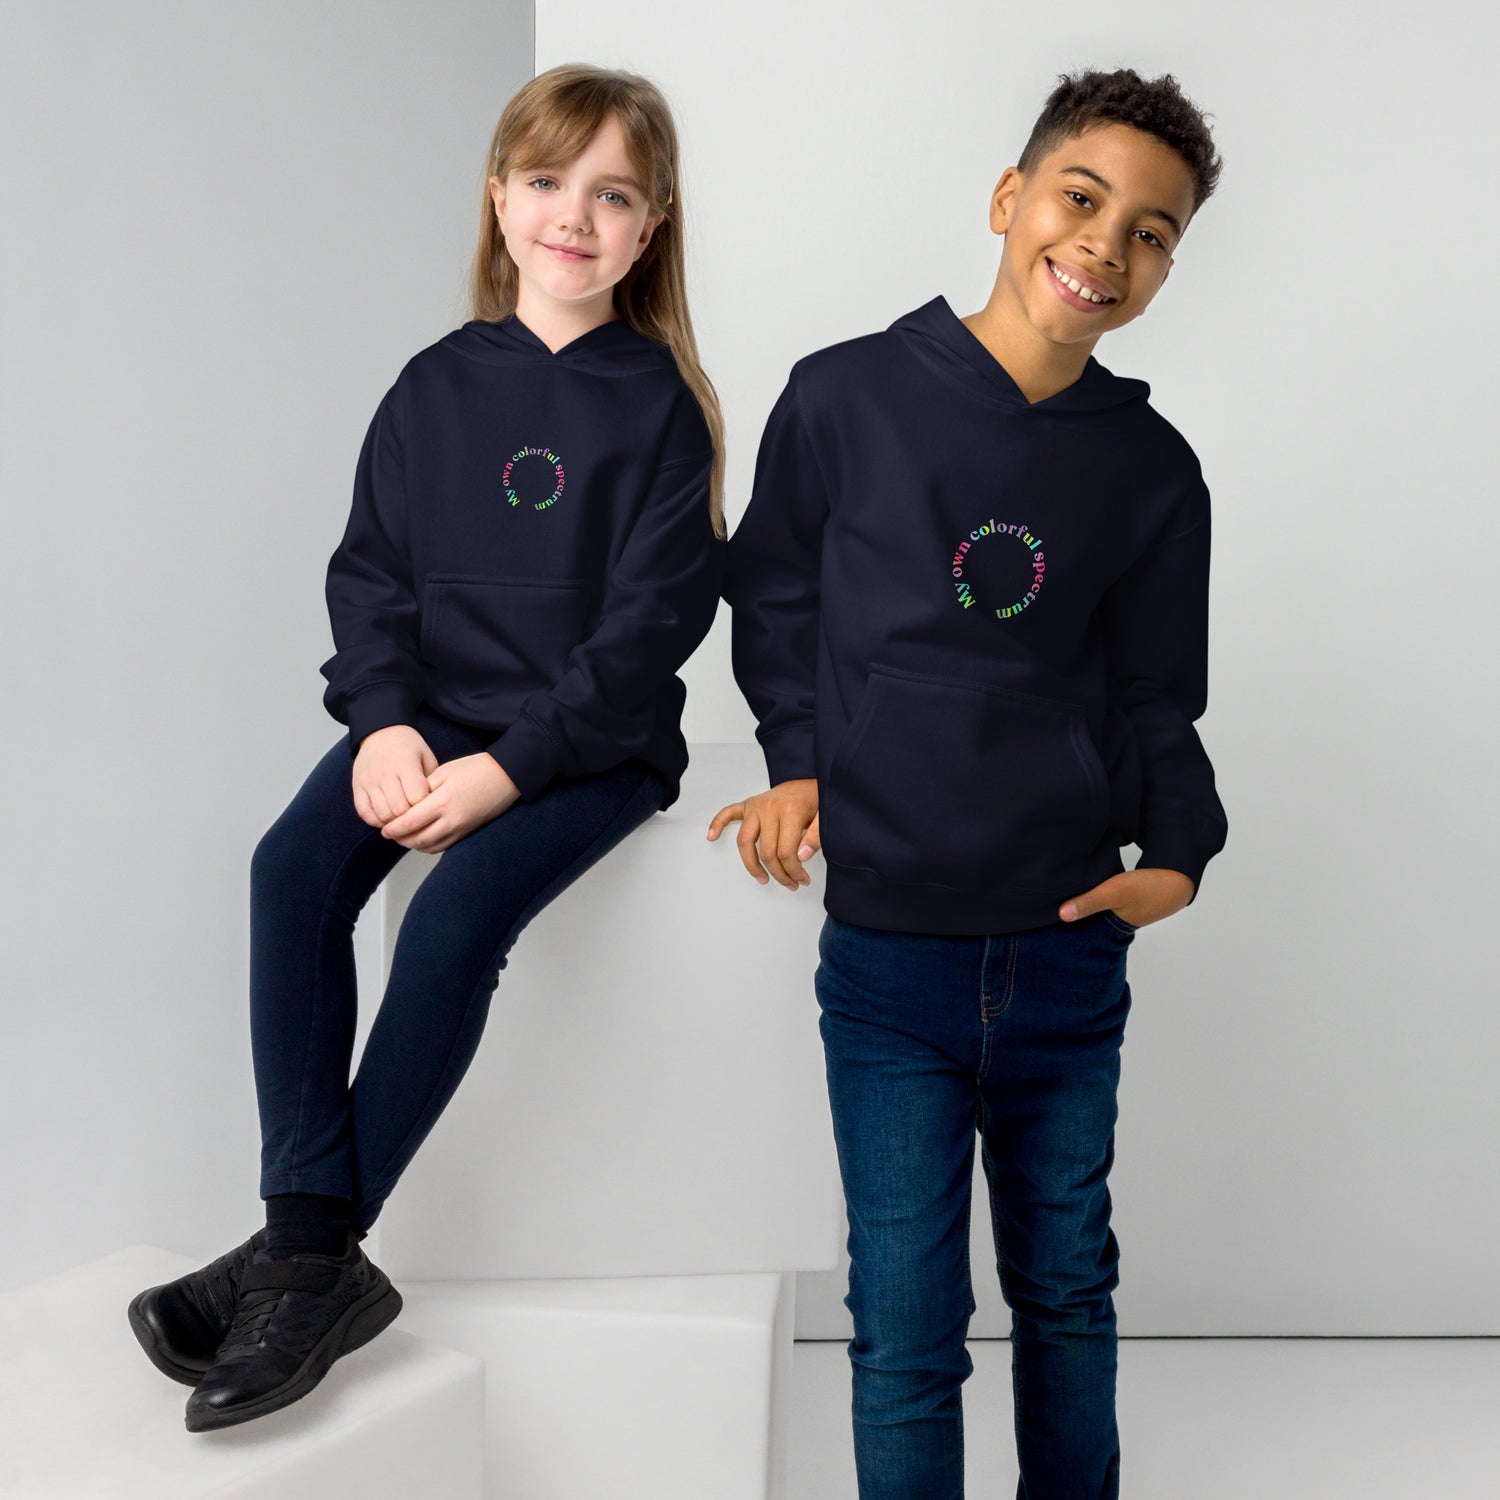 Indigo Kidswear hoodie featuring a "My own colorful spectrum" design.